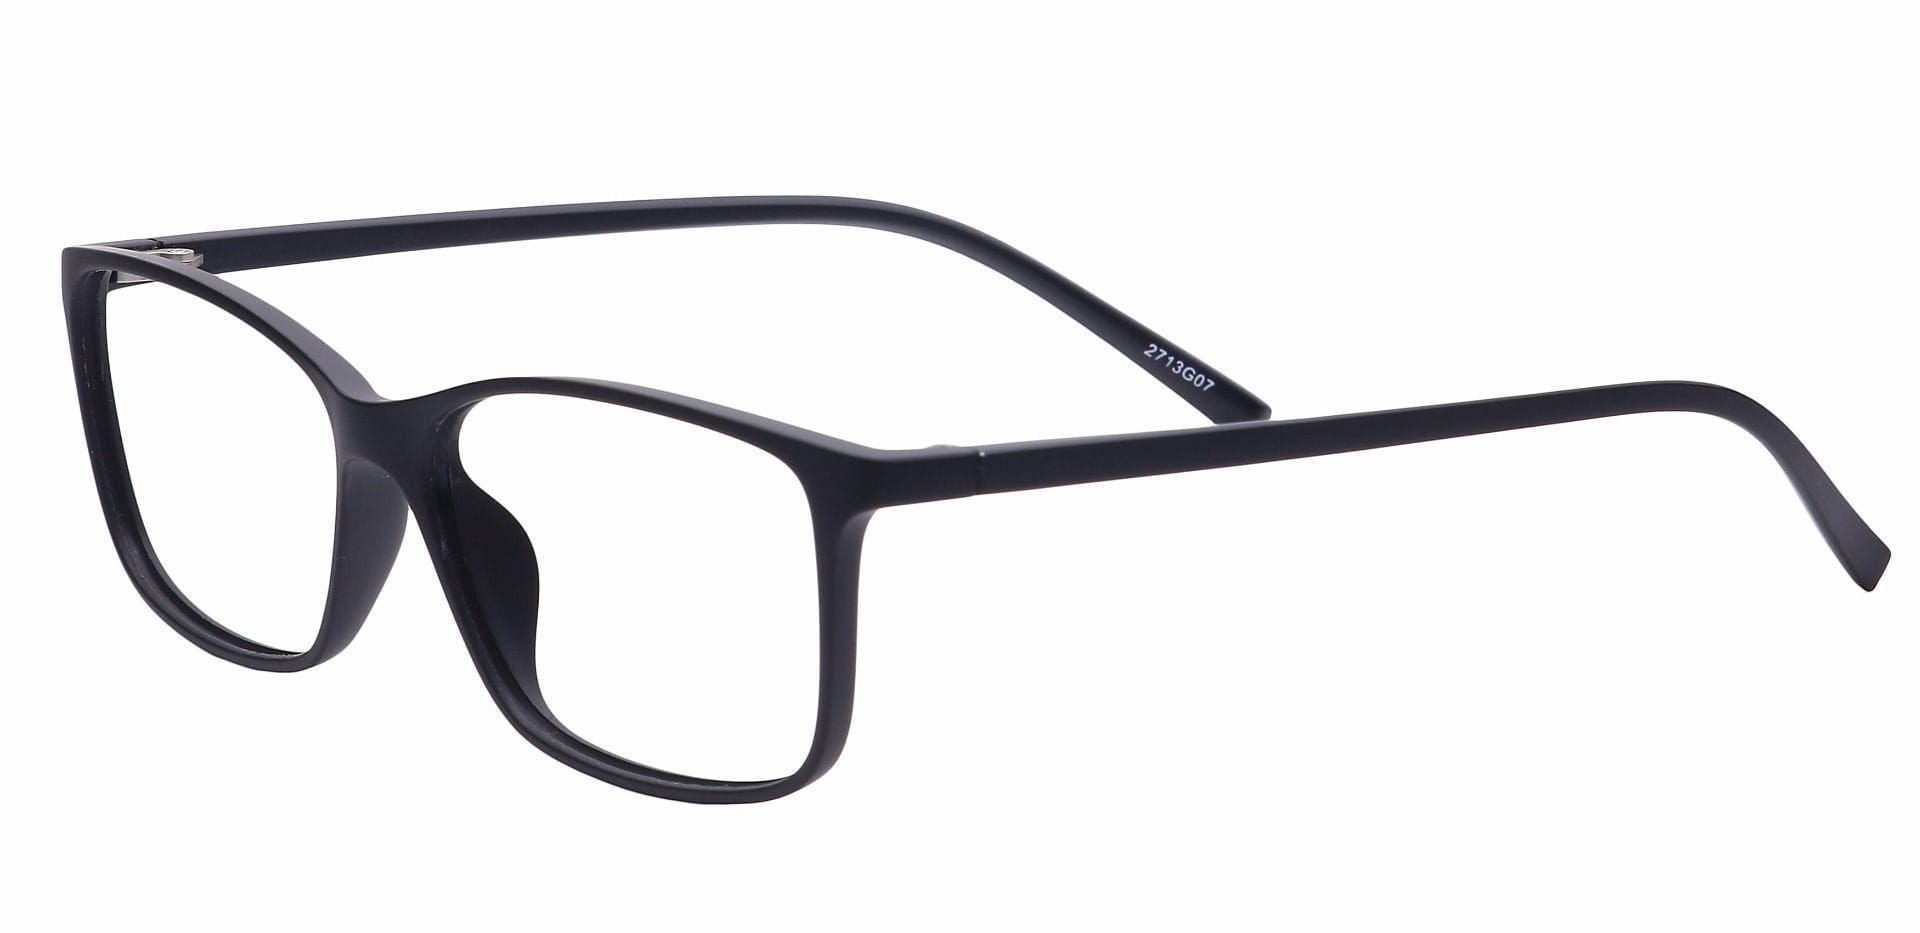 Pure Rectangle Progressive Glasses - Black